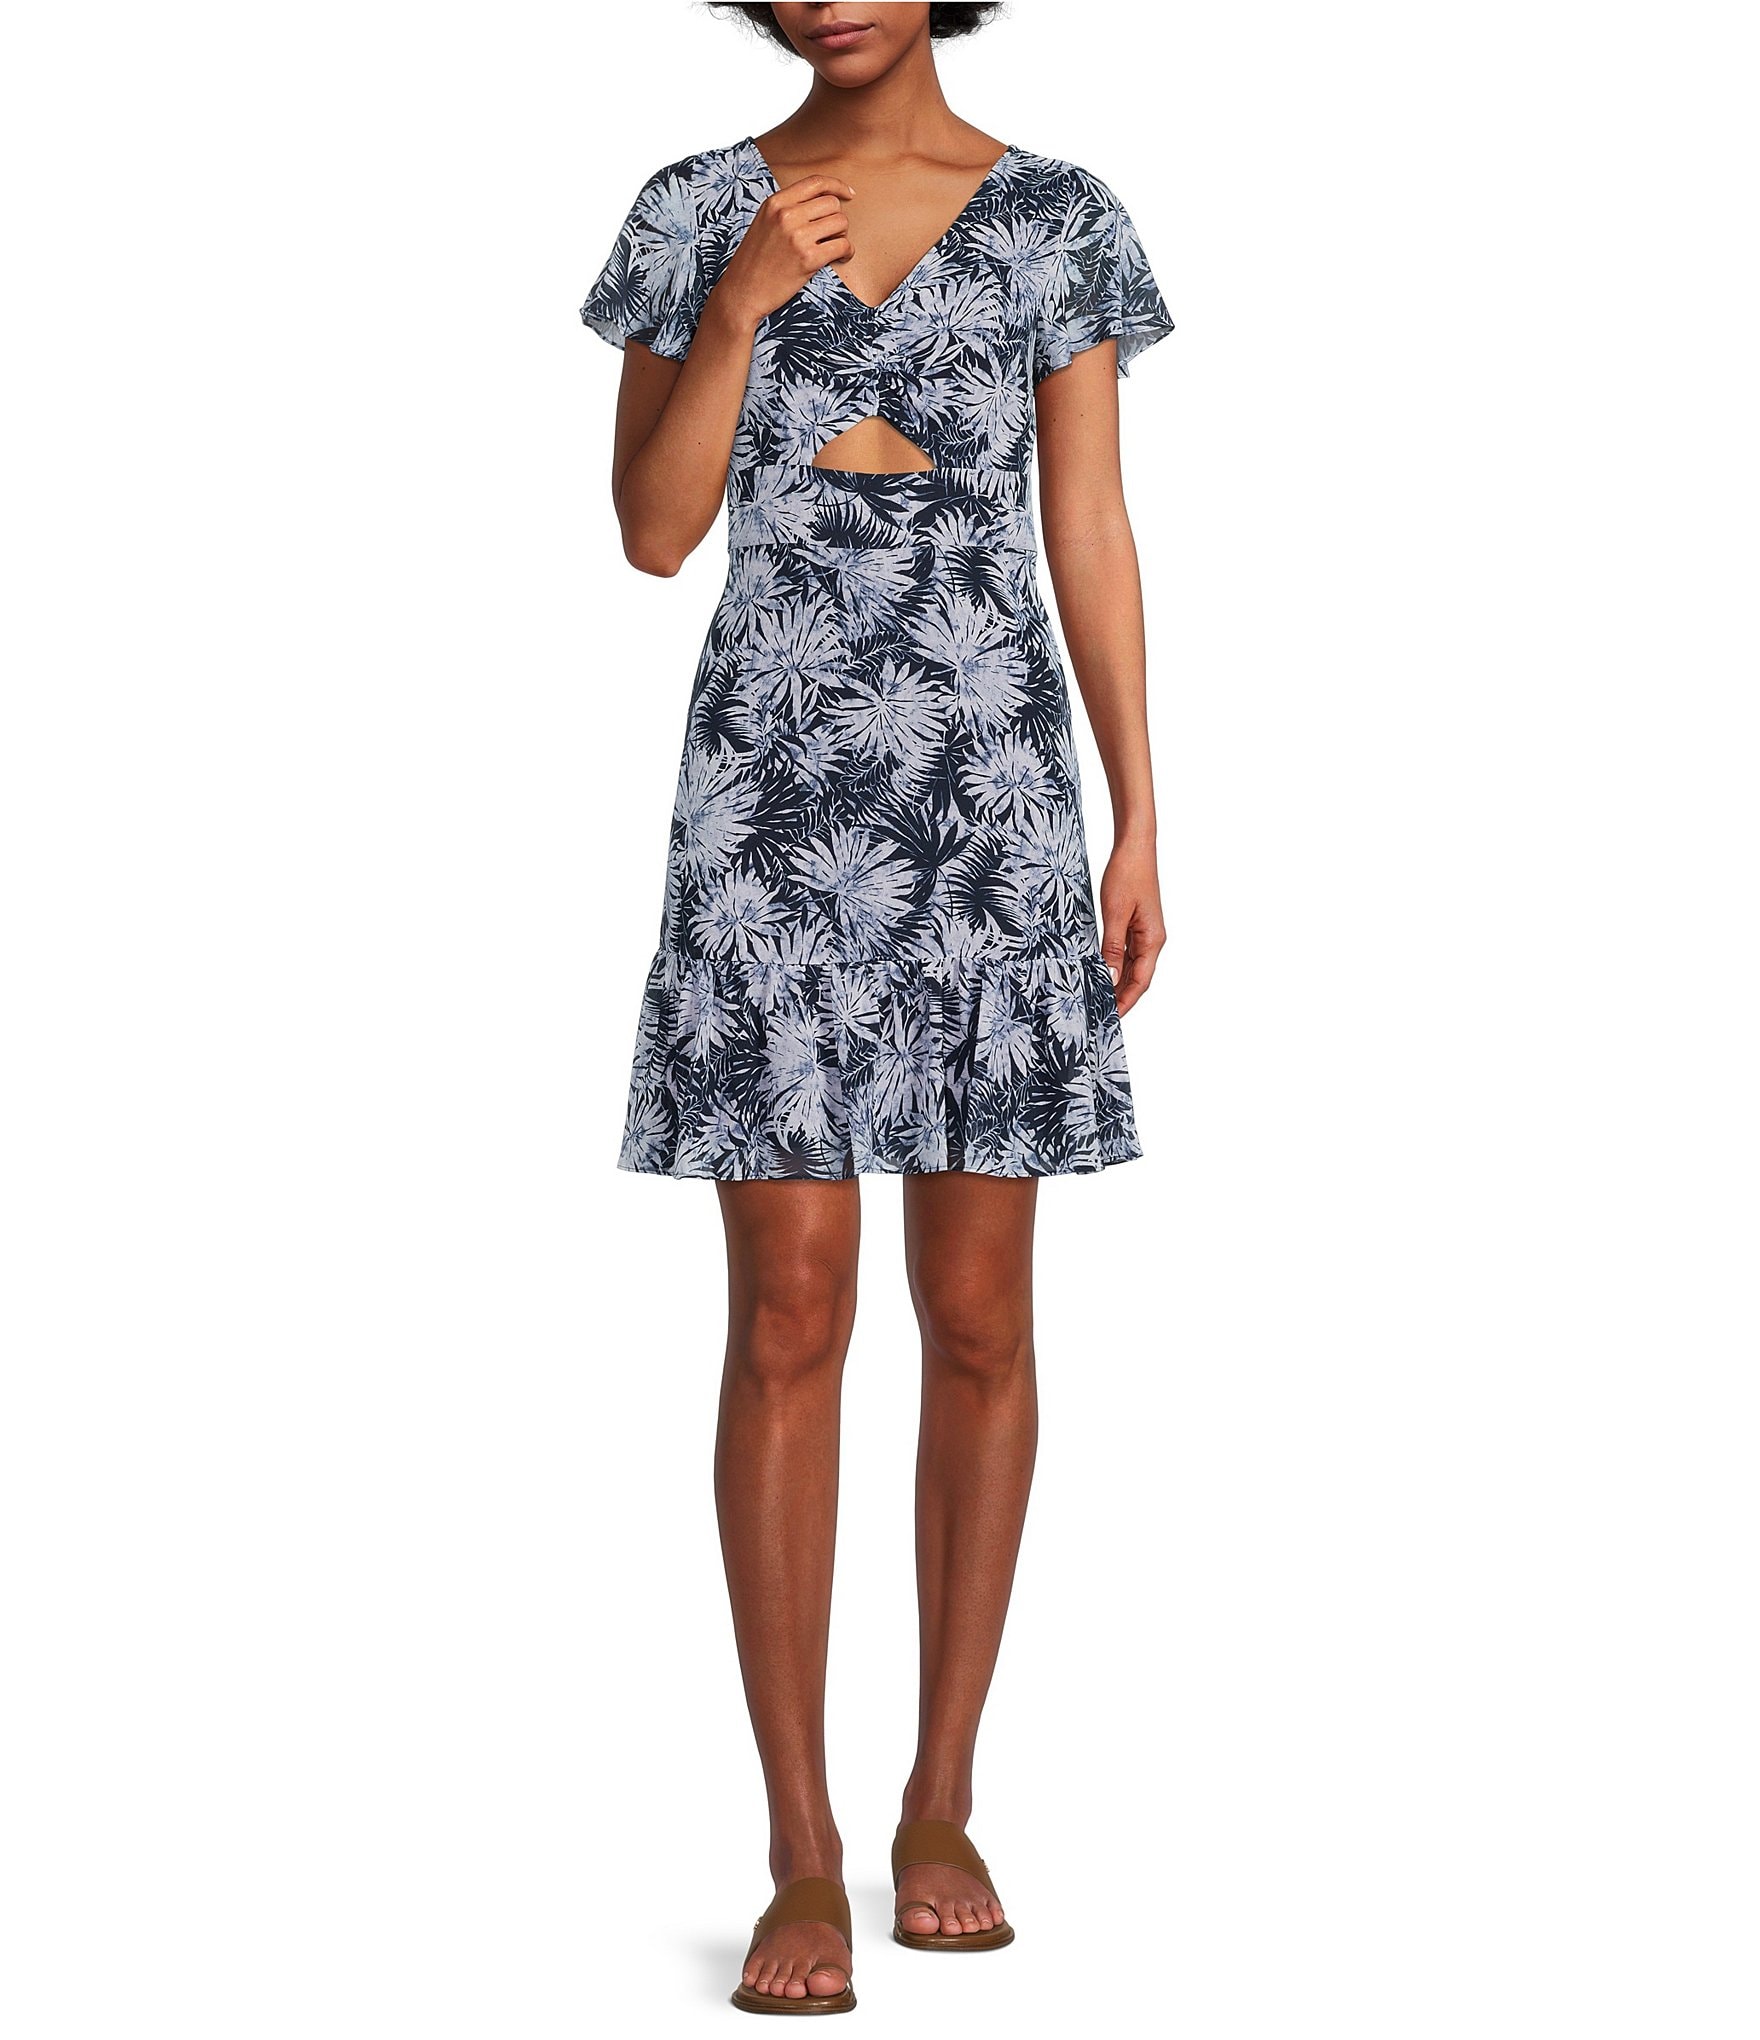 michael kors sale: Women's Dresses | Dillard's